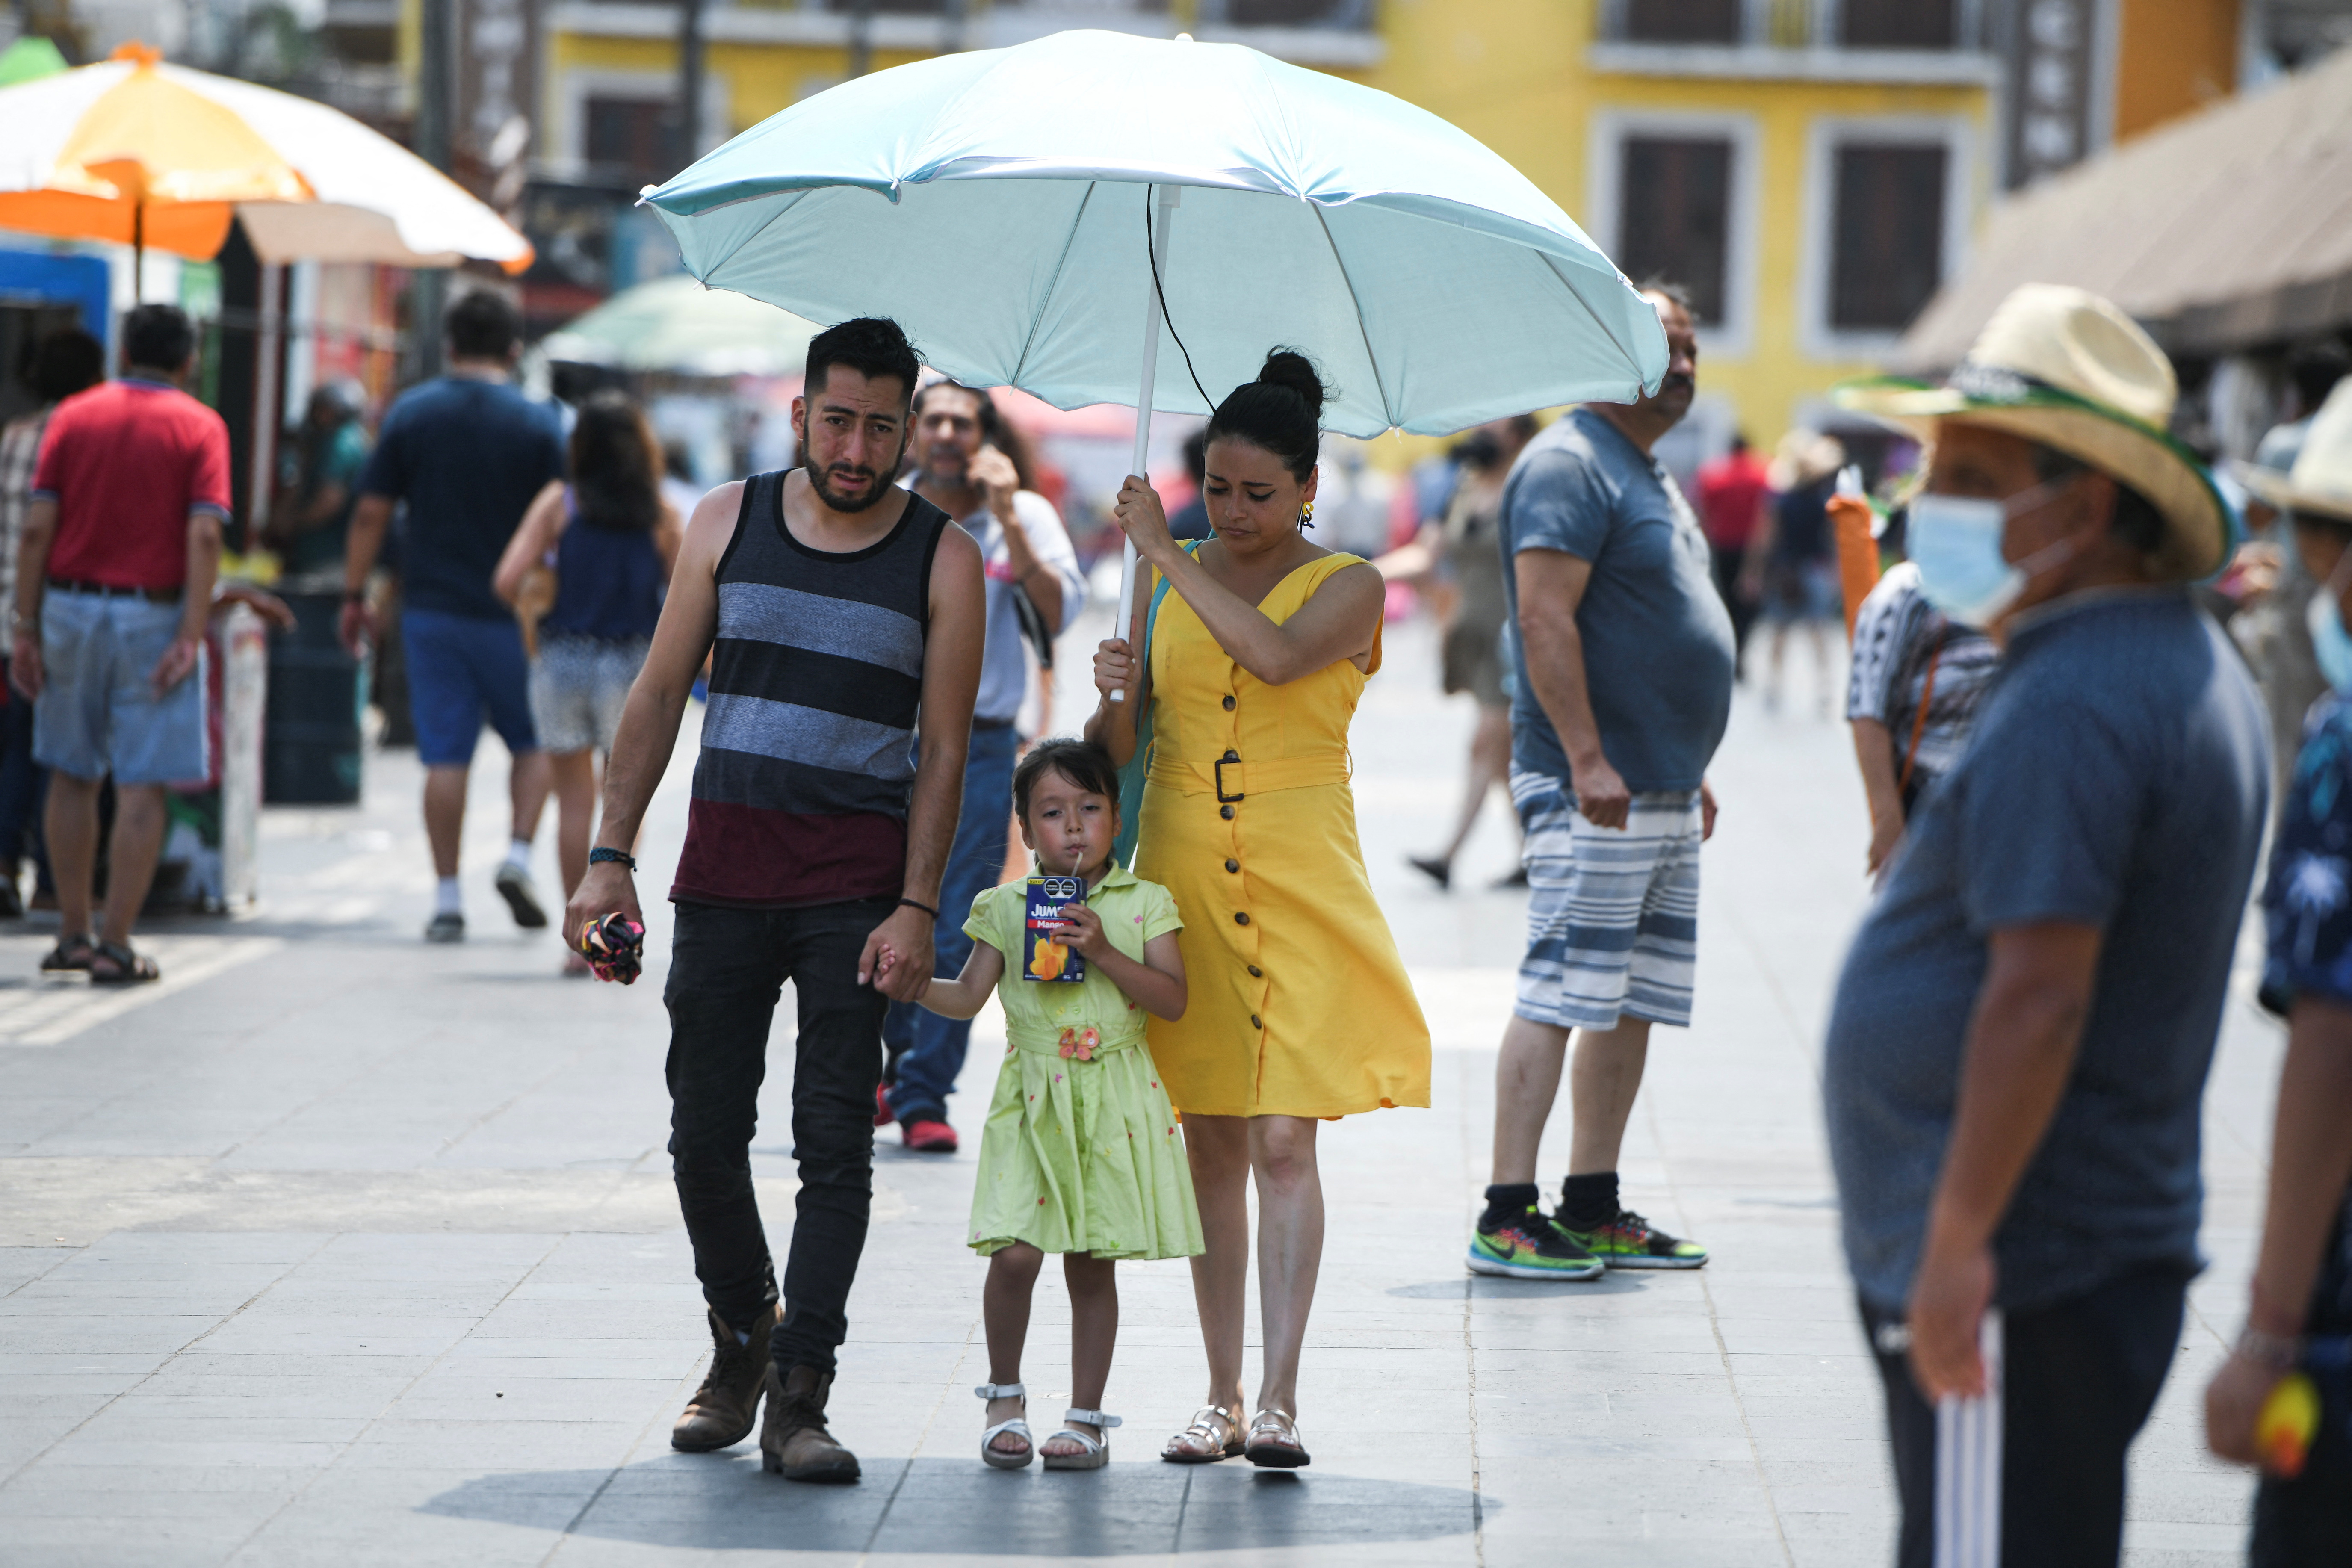 A family walks under an umbrella during a period of high temperatures in Veracruz, Mexico April 21, 2022. REUTERS/Yahir Ceballos